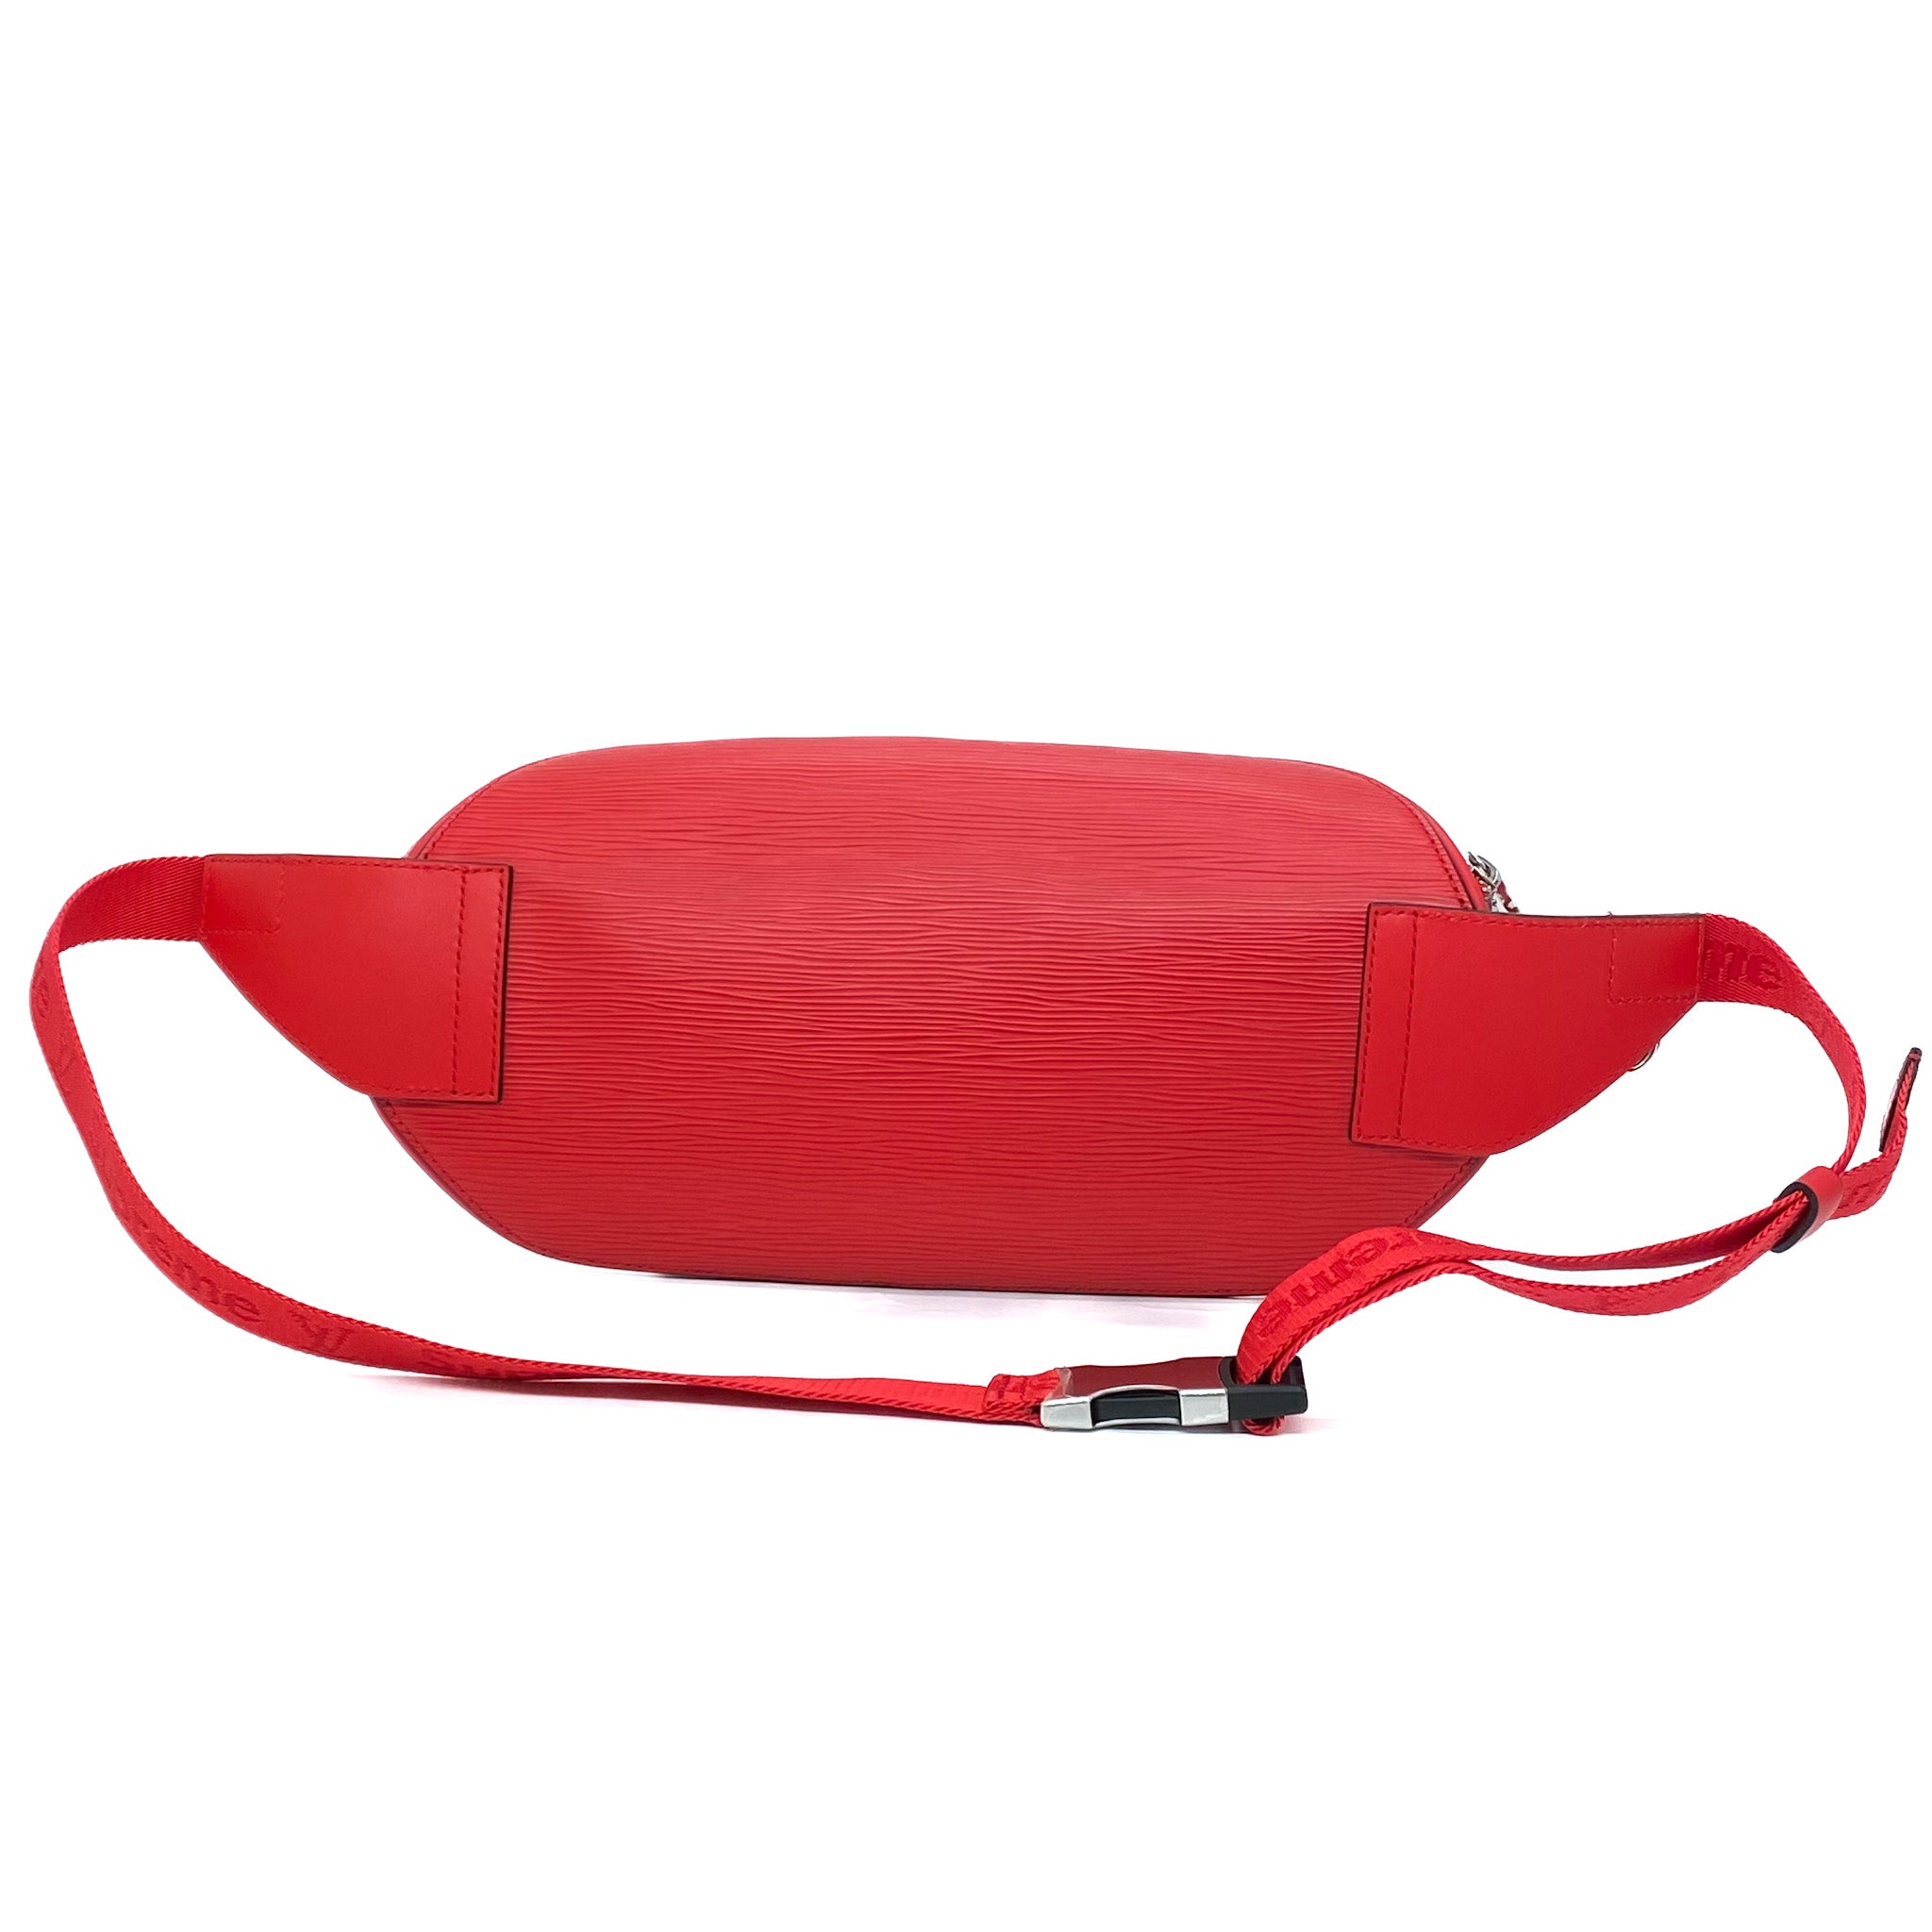 LOUIS VUITTON Supreme Epi Bum Bag Body Bag Leather Red M53418 Purse NZ2117